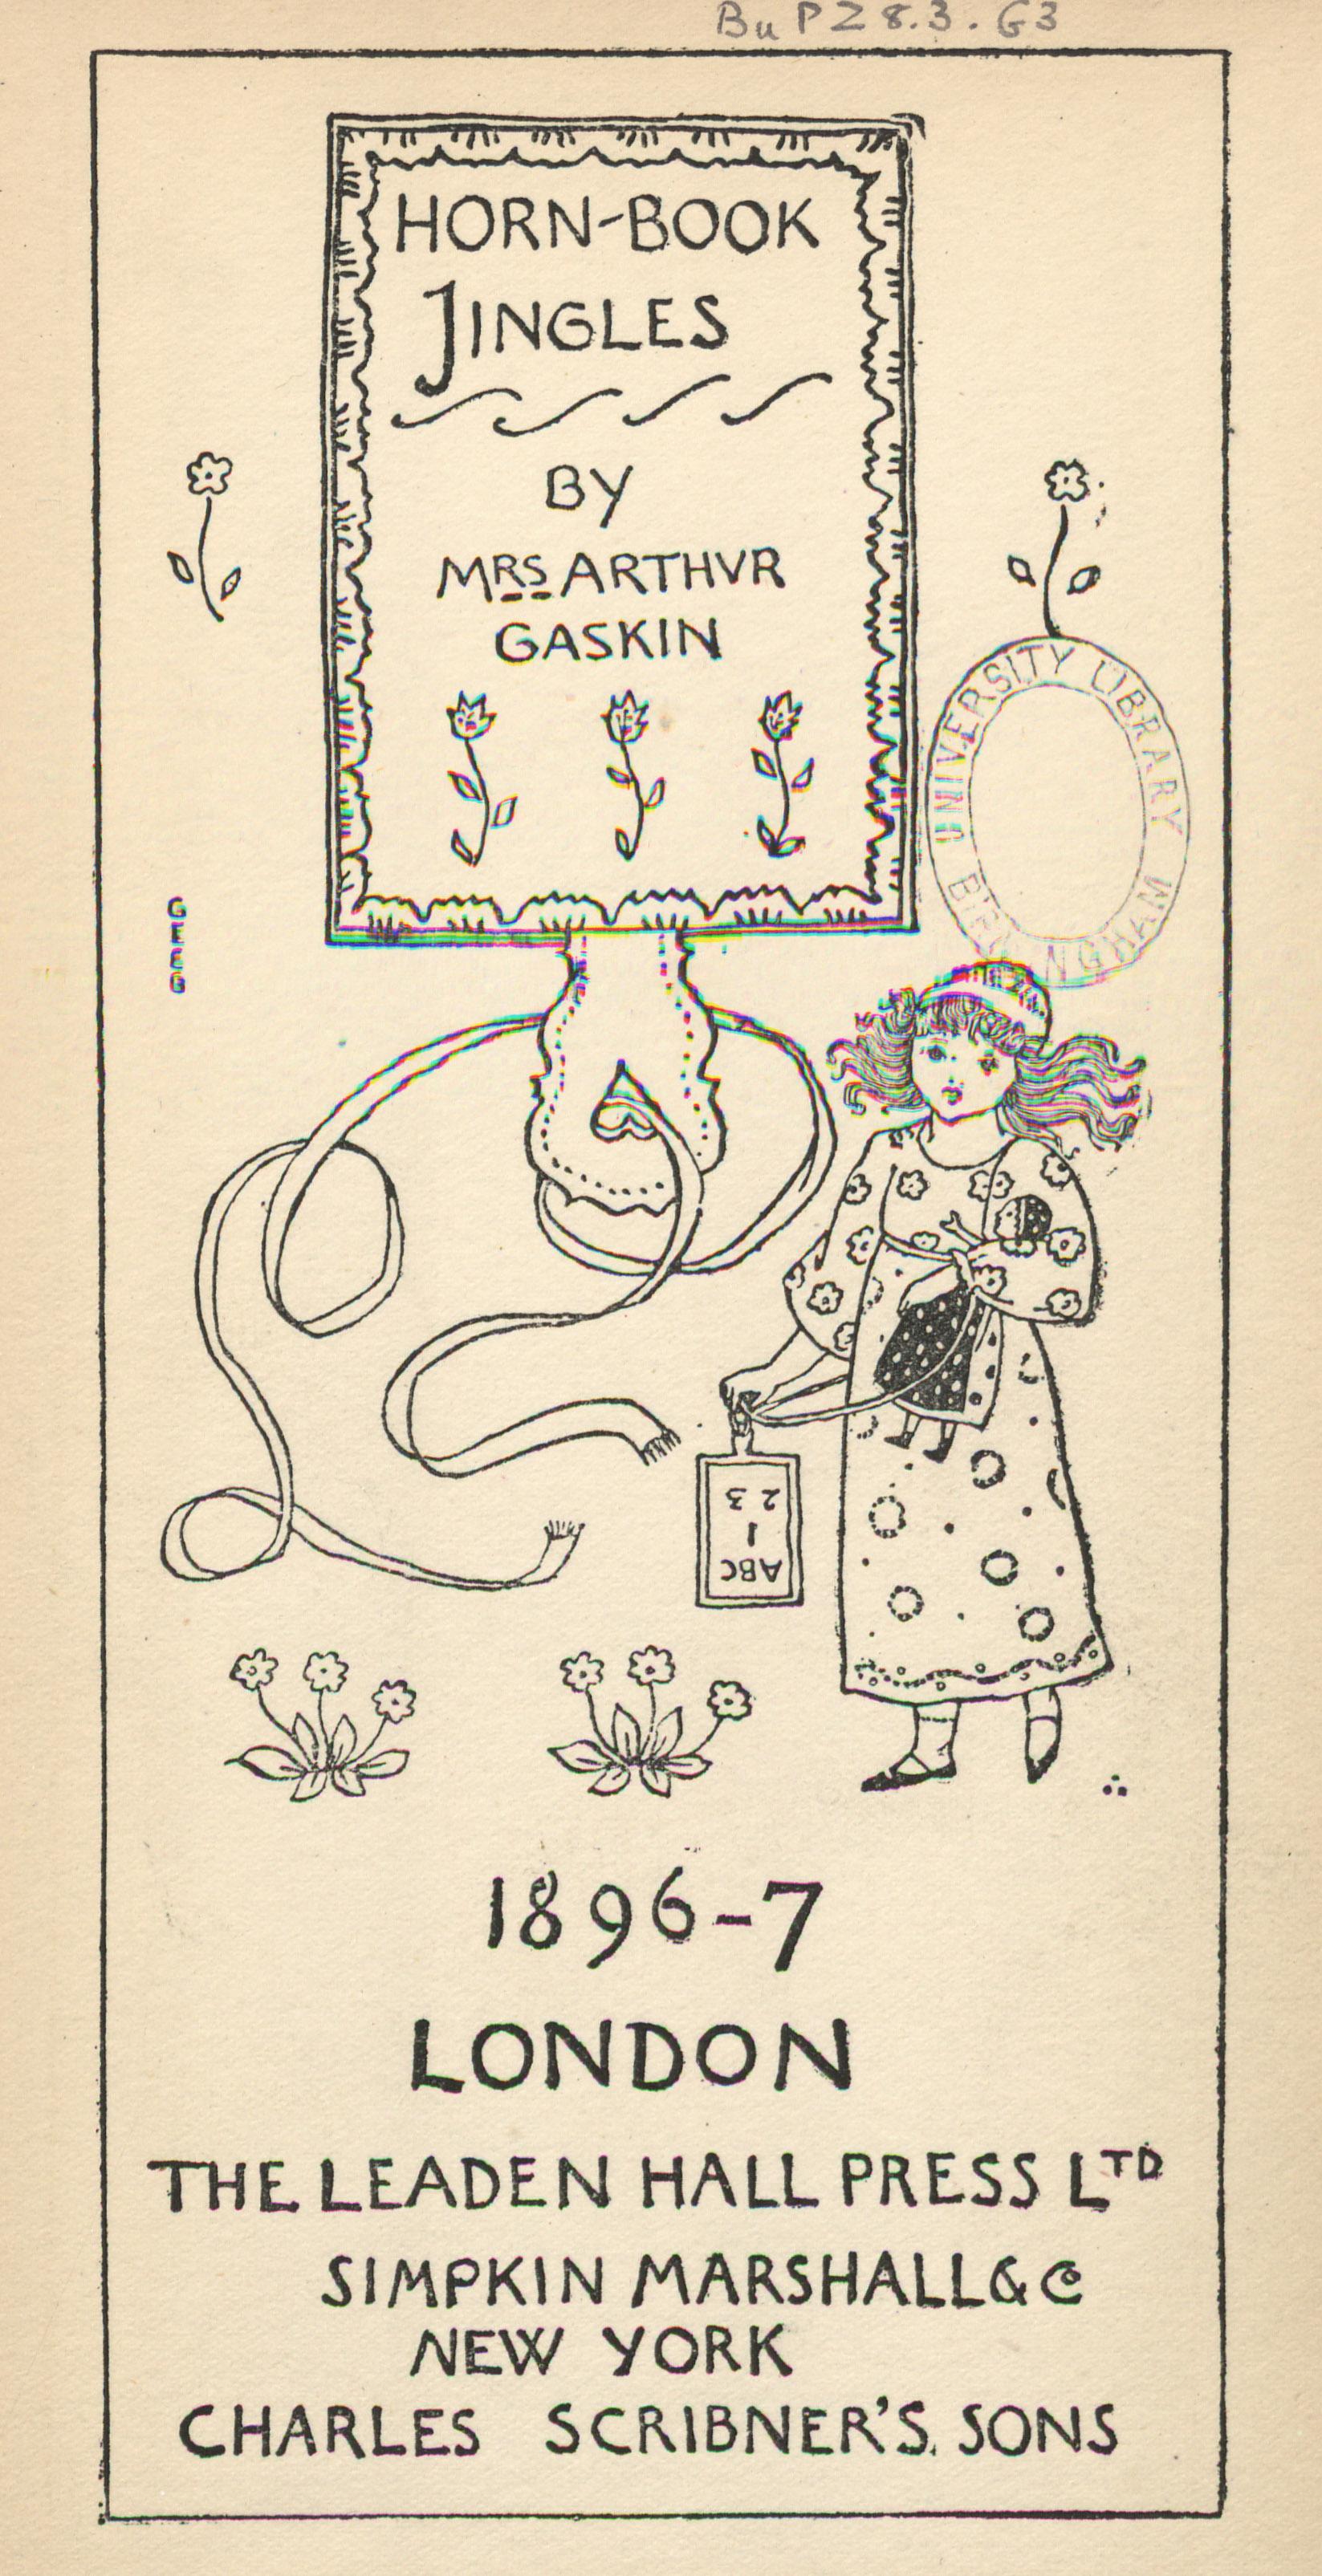 Horn Book Jingles by Georgie Gaskin